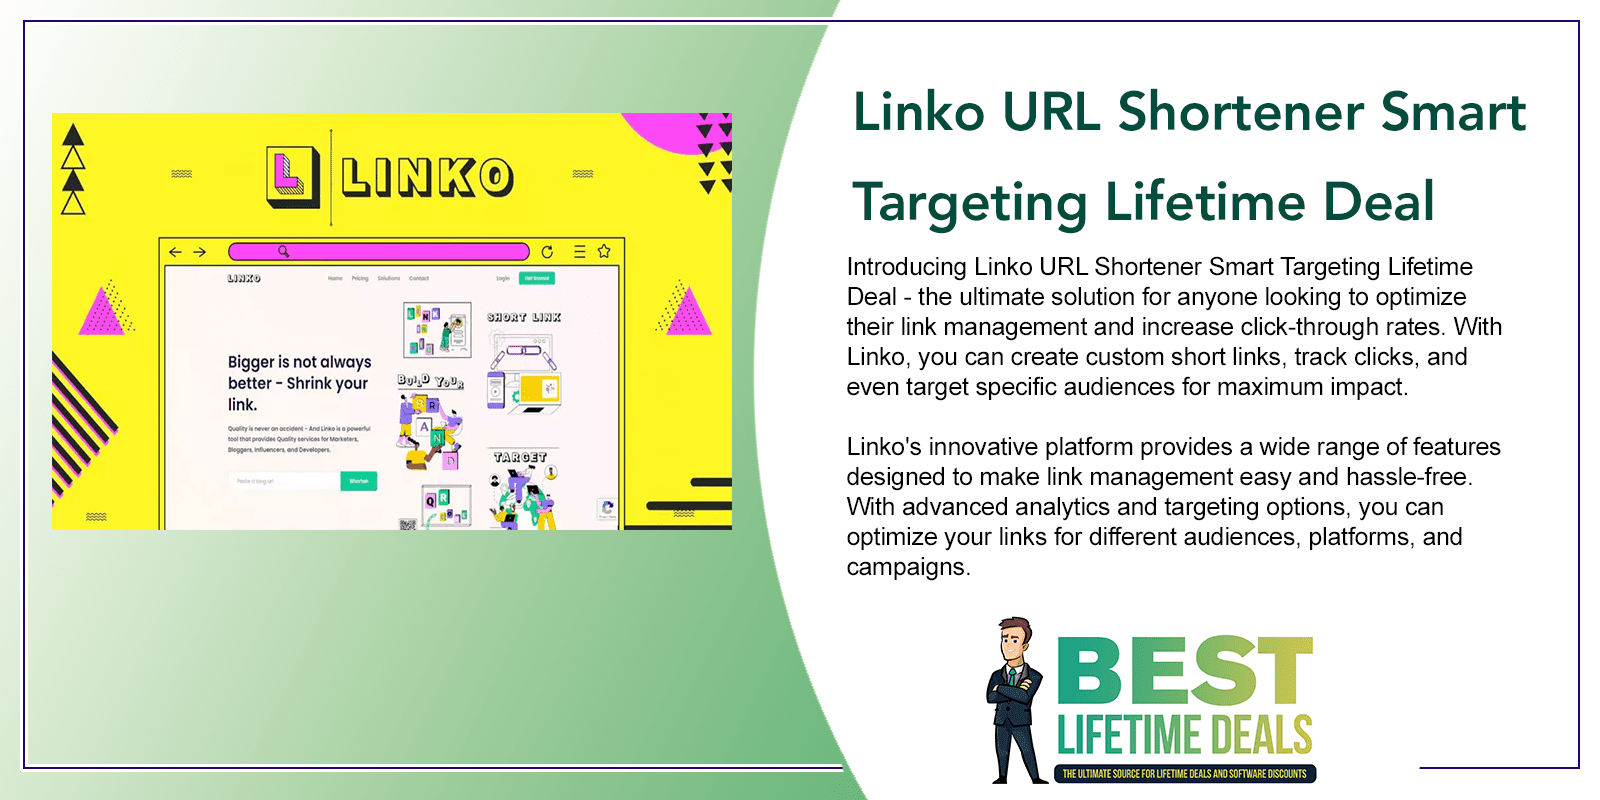 Linko URL Shortener Smart Targeting Lifetime Deal Featured Image